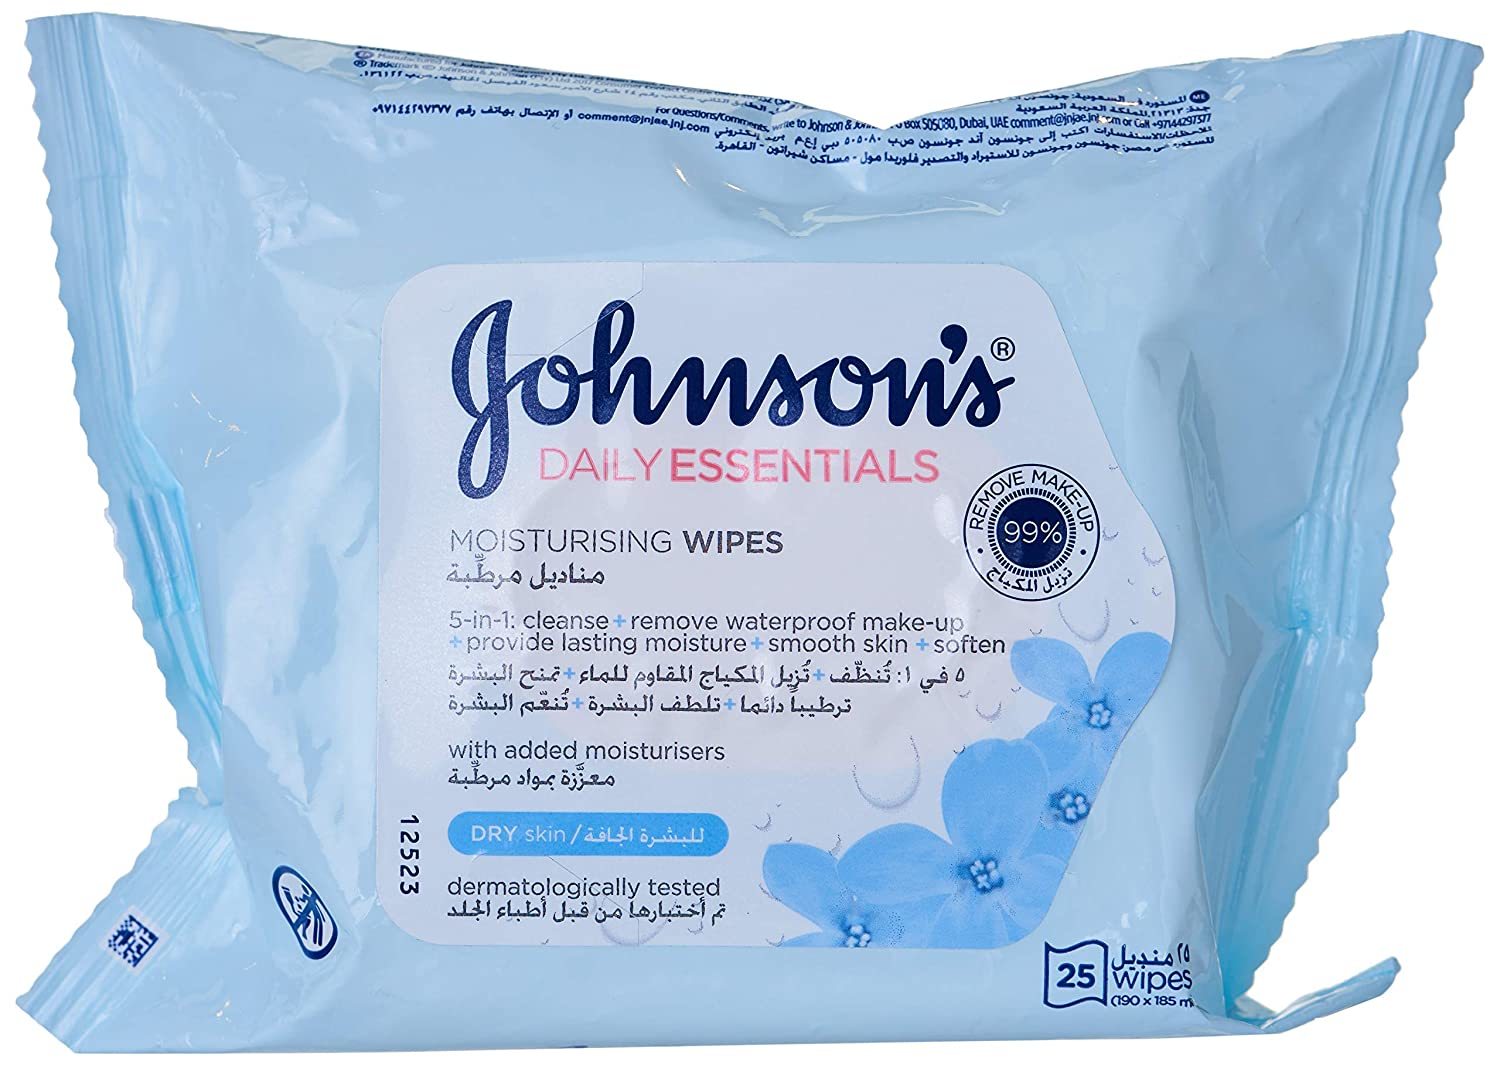 New Johnson's Daily Essentials Nourishing 25 Wipes